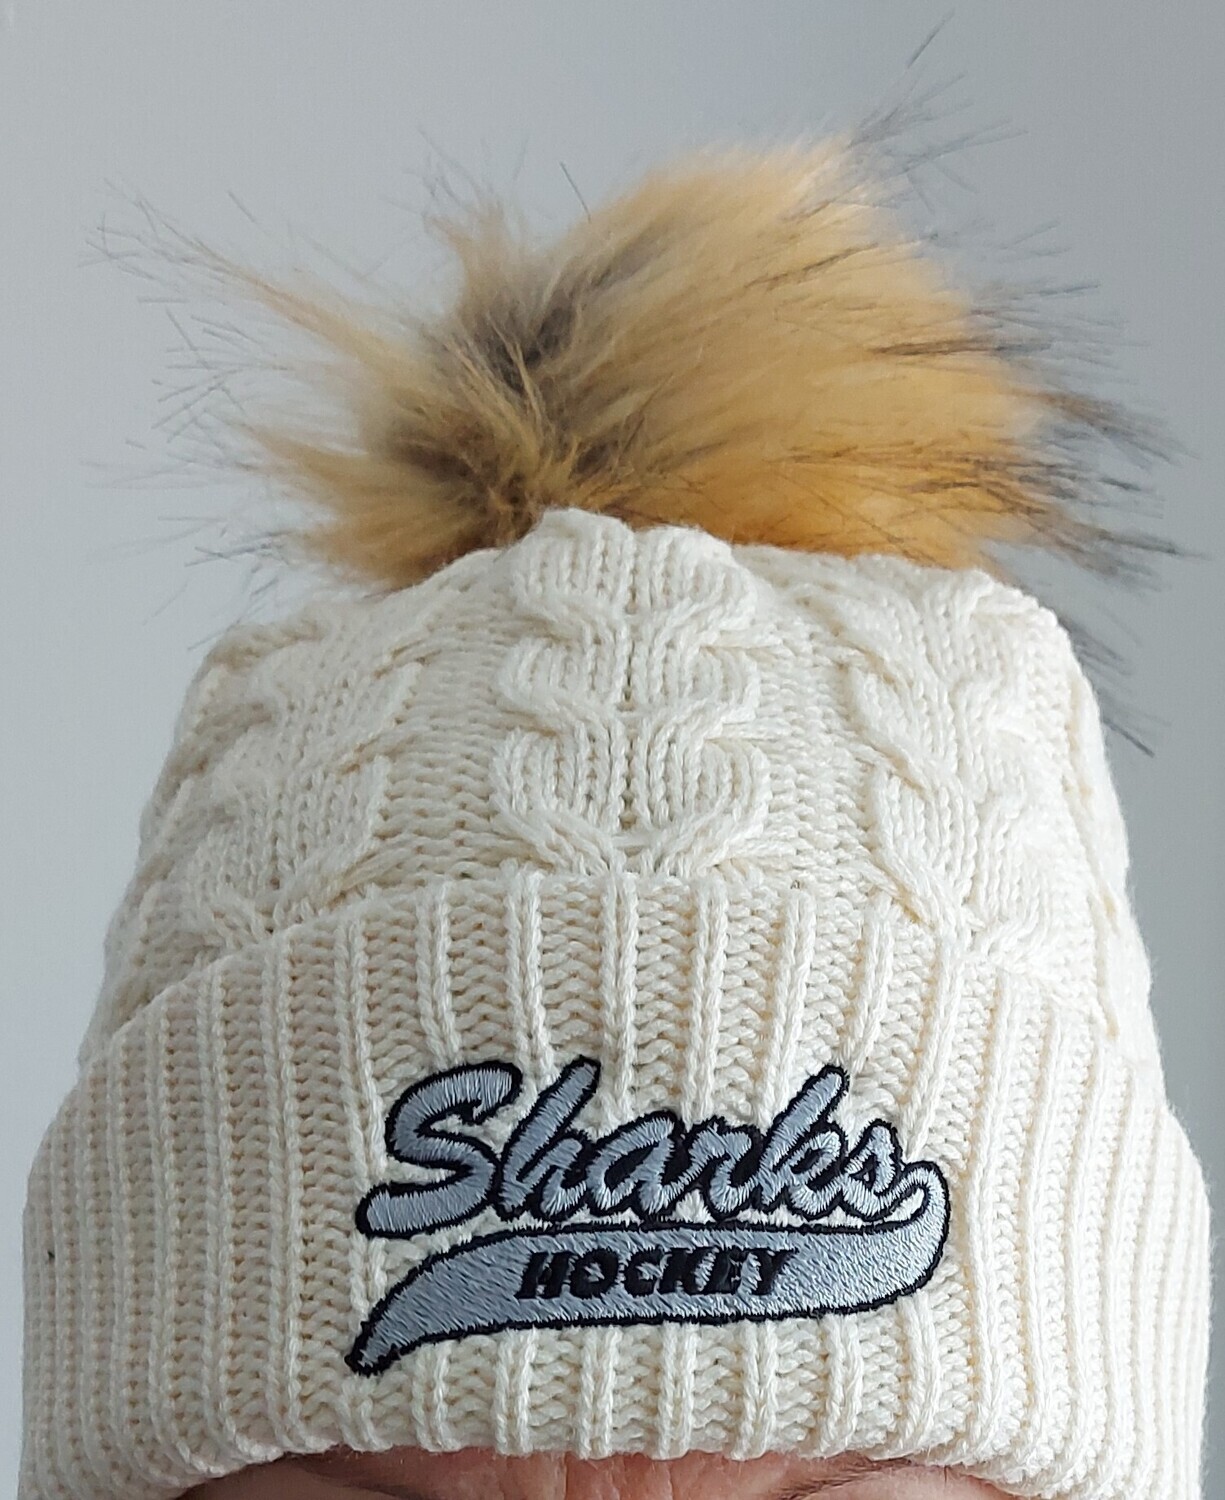 Toque _ Sharks Hockey - Cream, SHARKS HOCKEY Toque with POM: SHARKS HOCKEY Toque with POM - One size fits all